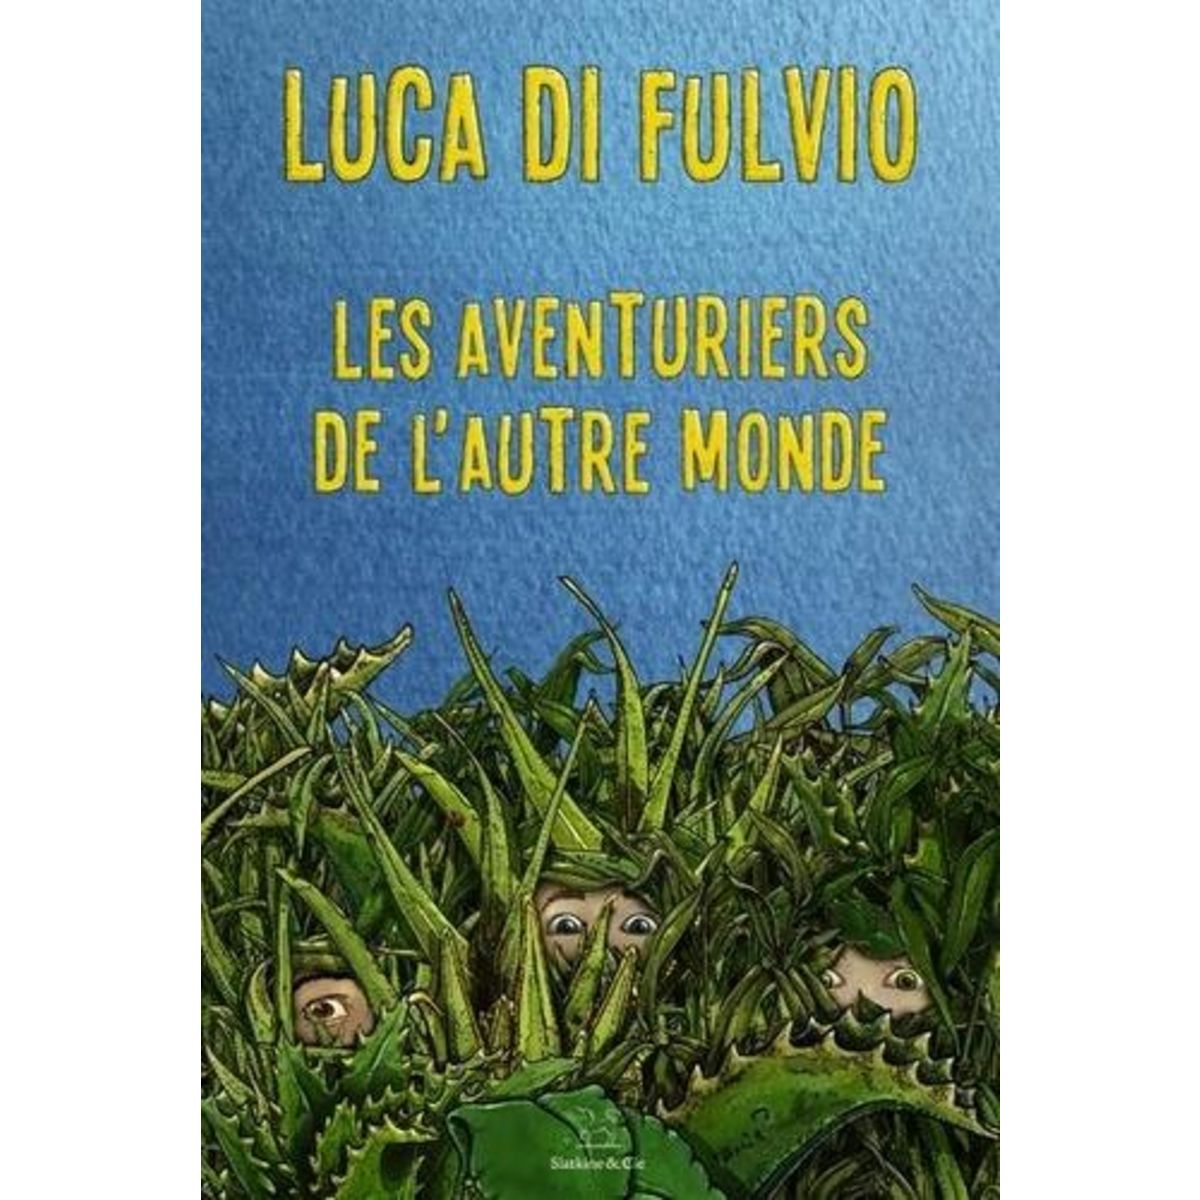  LES AVENTURIERS DE L'AUTRE MONDE, Di Fulvio Luca